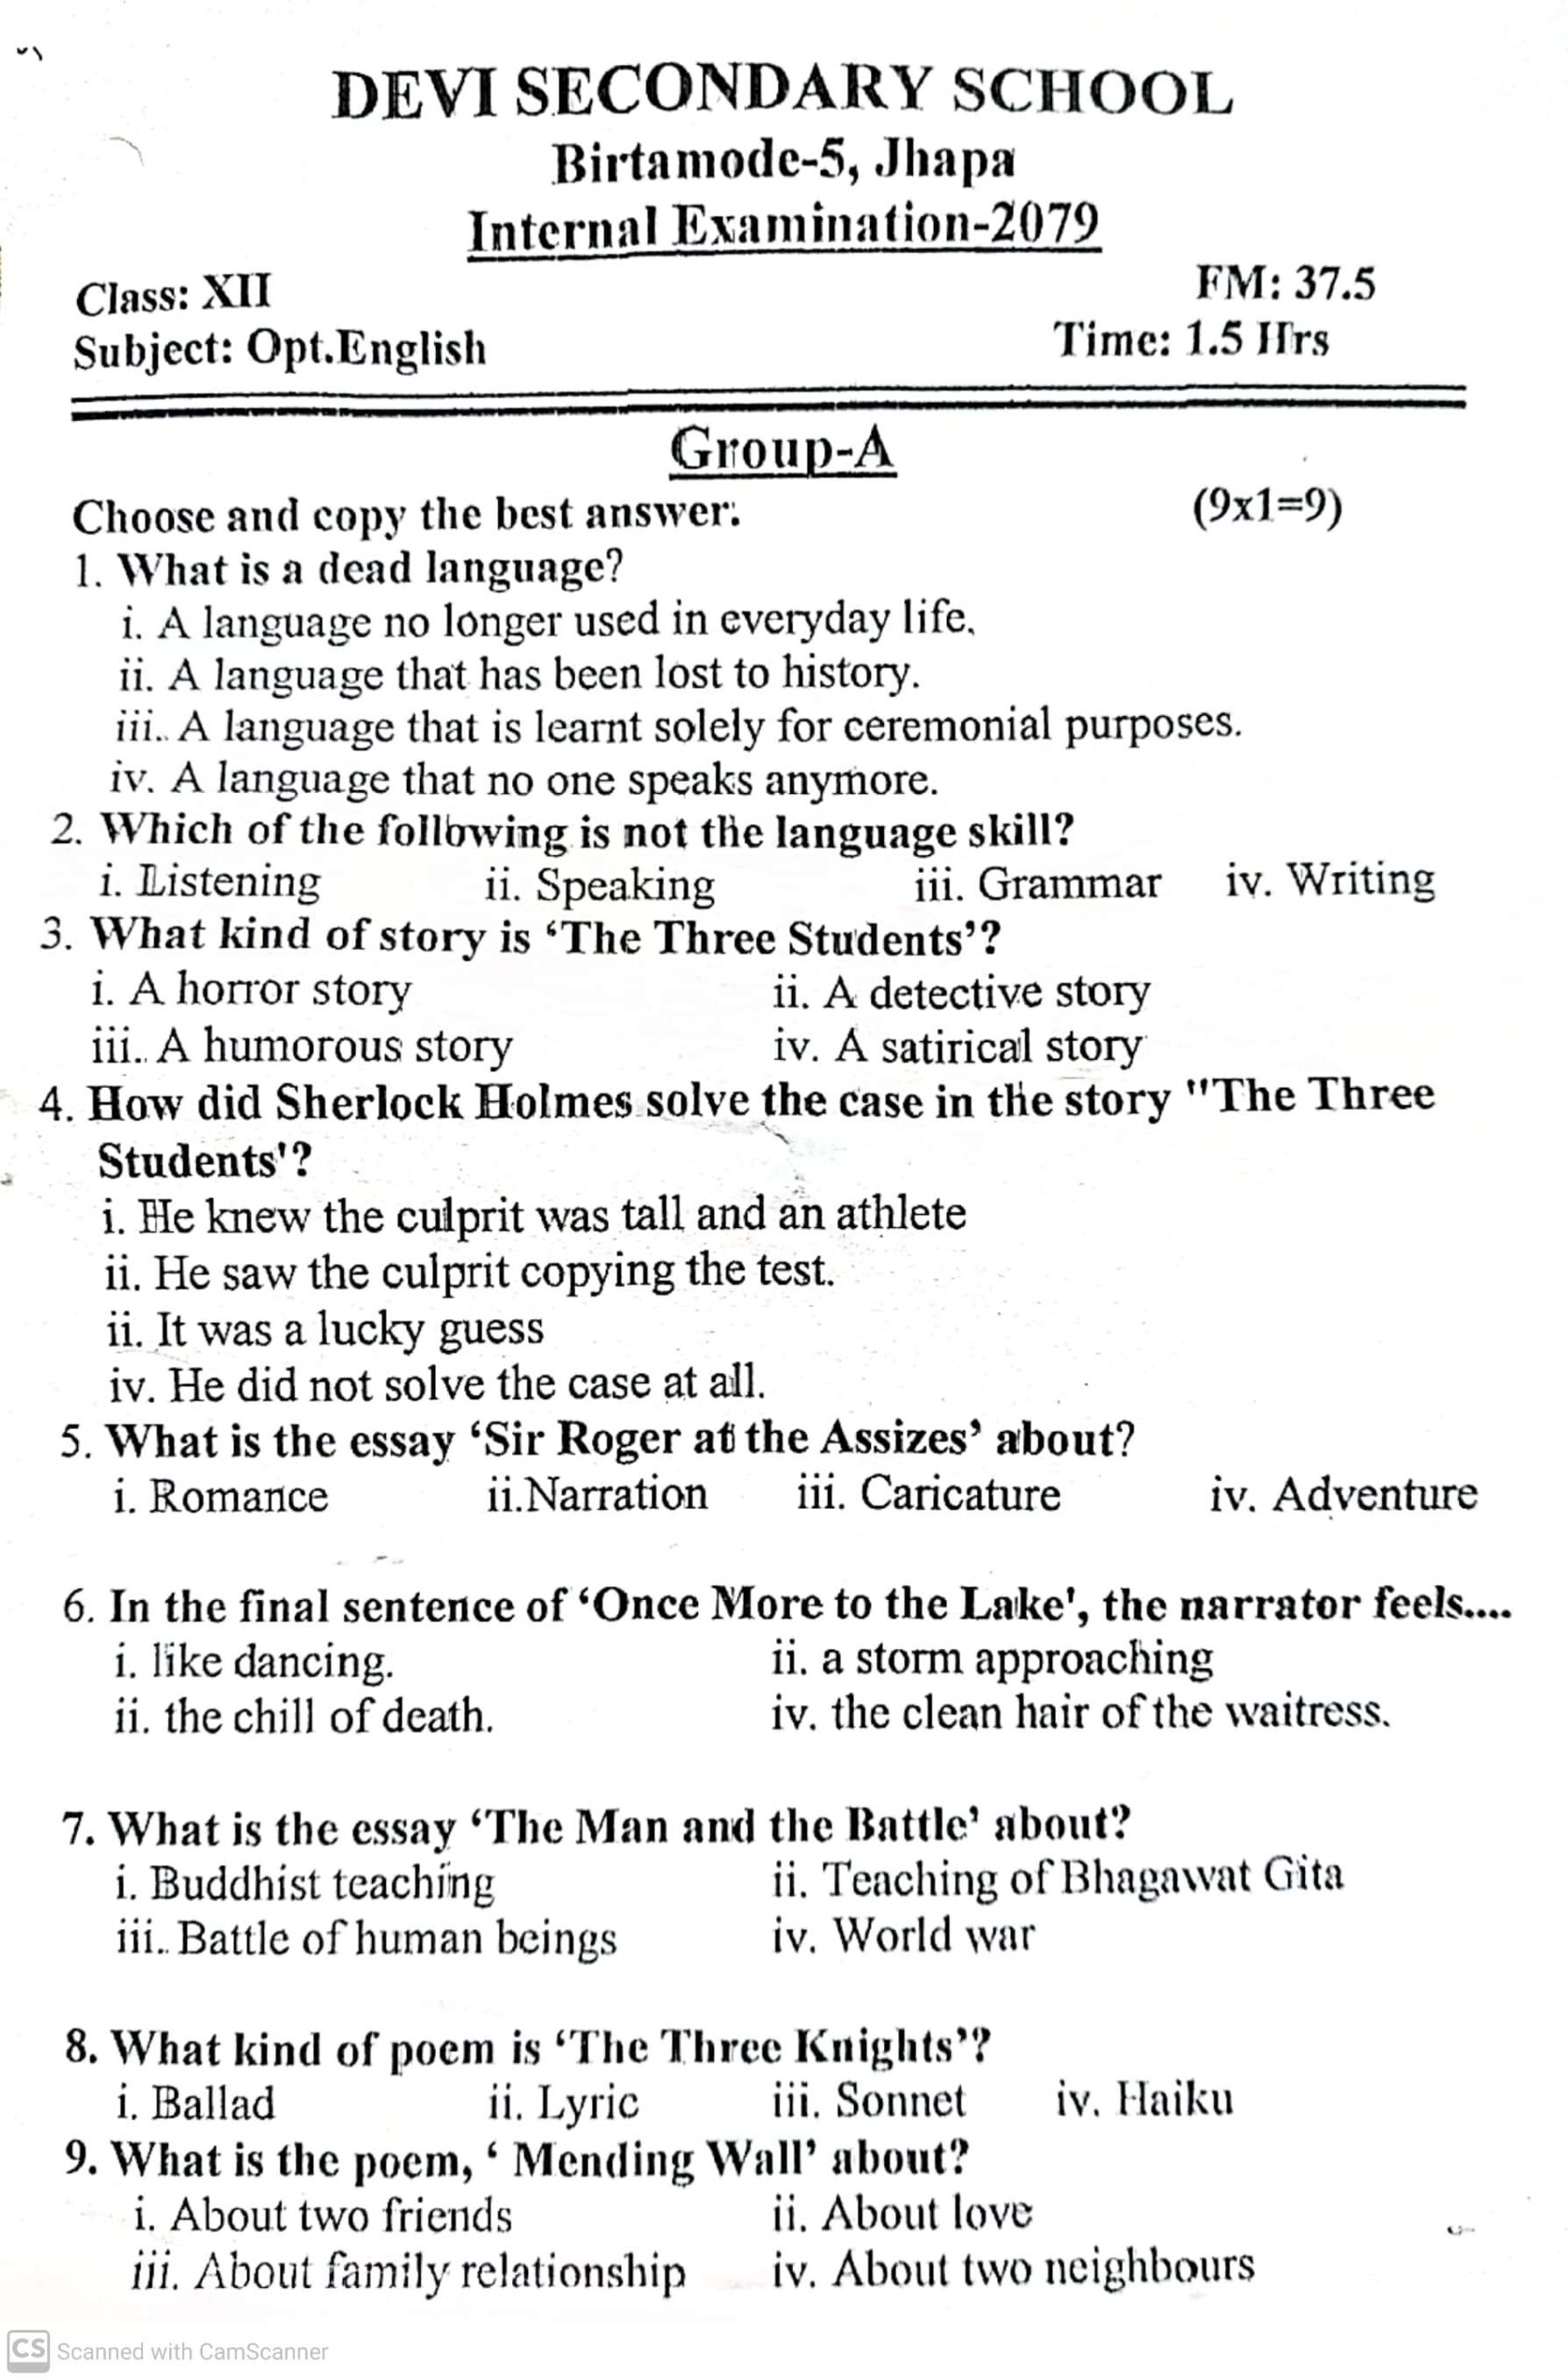 Class 12 Optional English Internal Exam Question Paper 2079